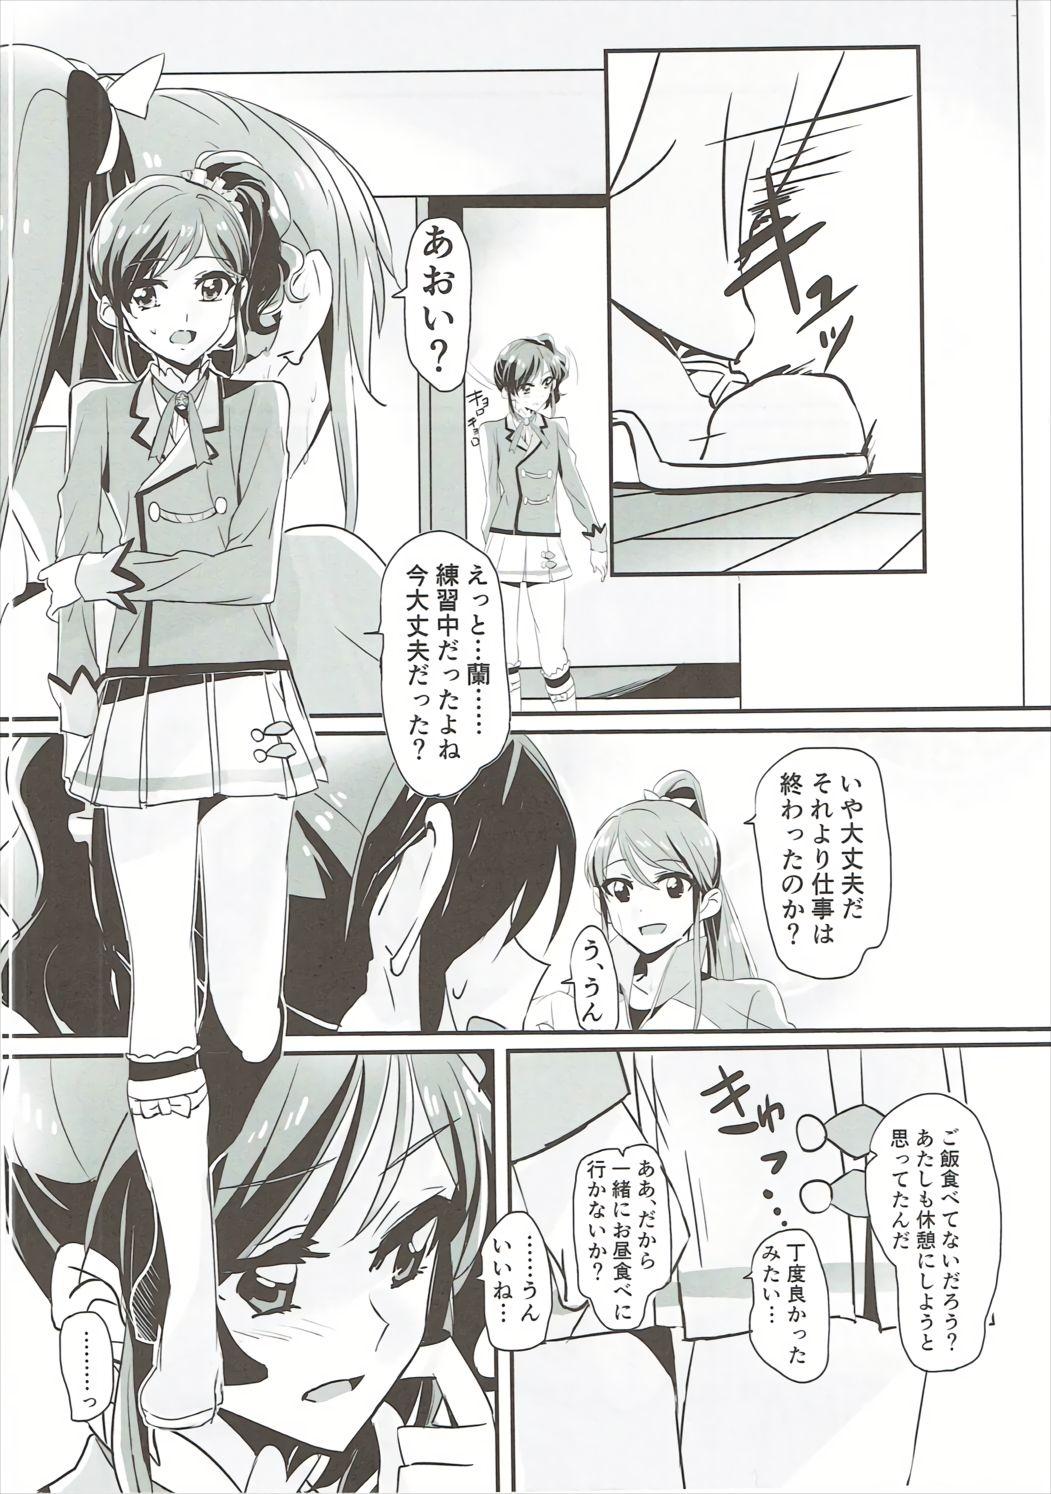 Threesome Little incident - Aikatsu Hogtied - Page 3